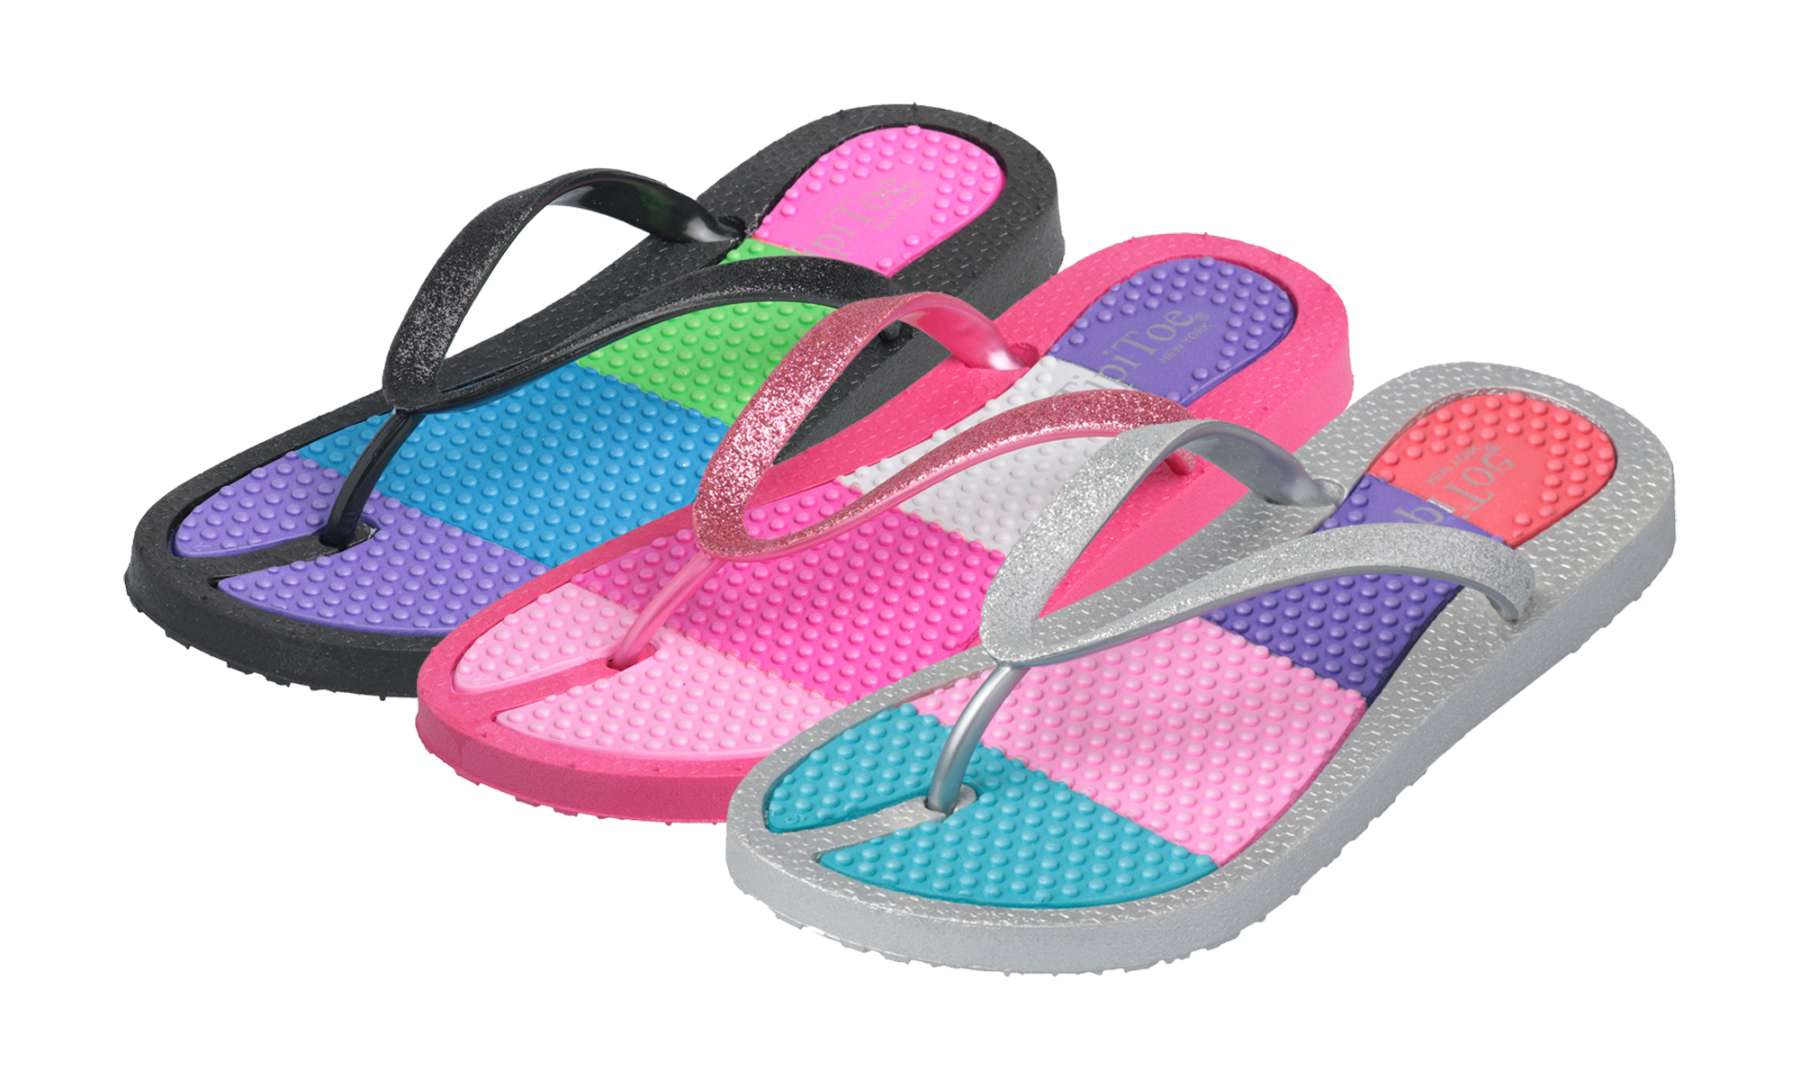 Wholesale Flip Flops for Kids - Bulk Kids' Sandals - DollarDays